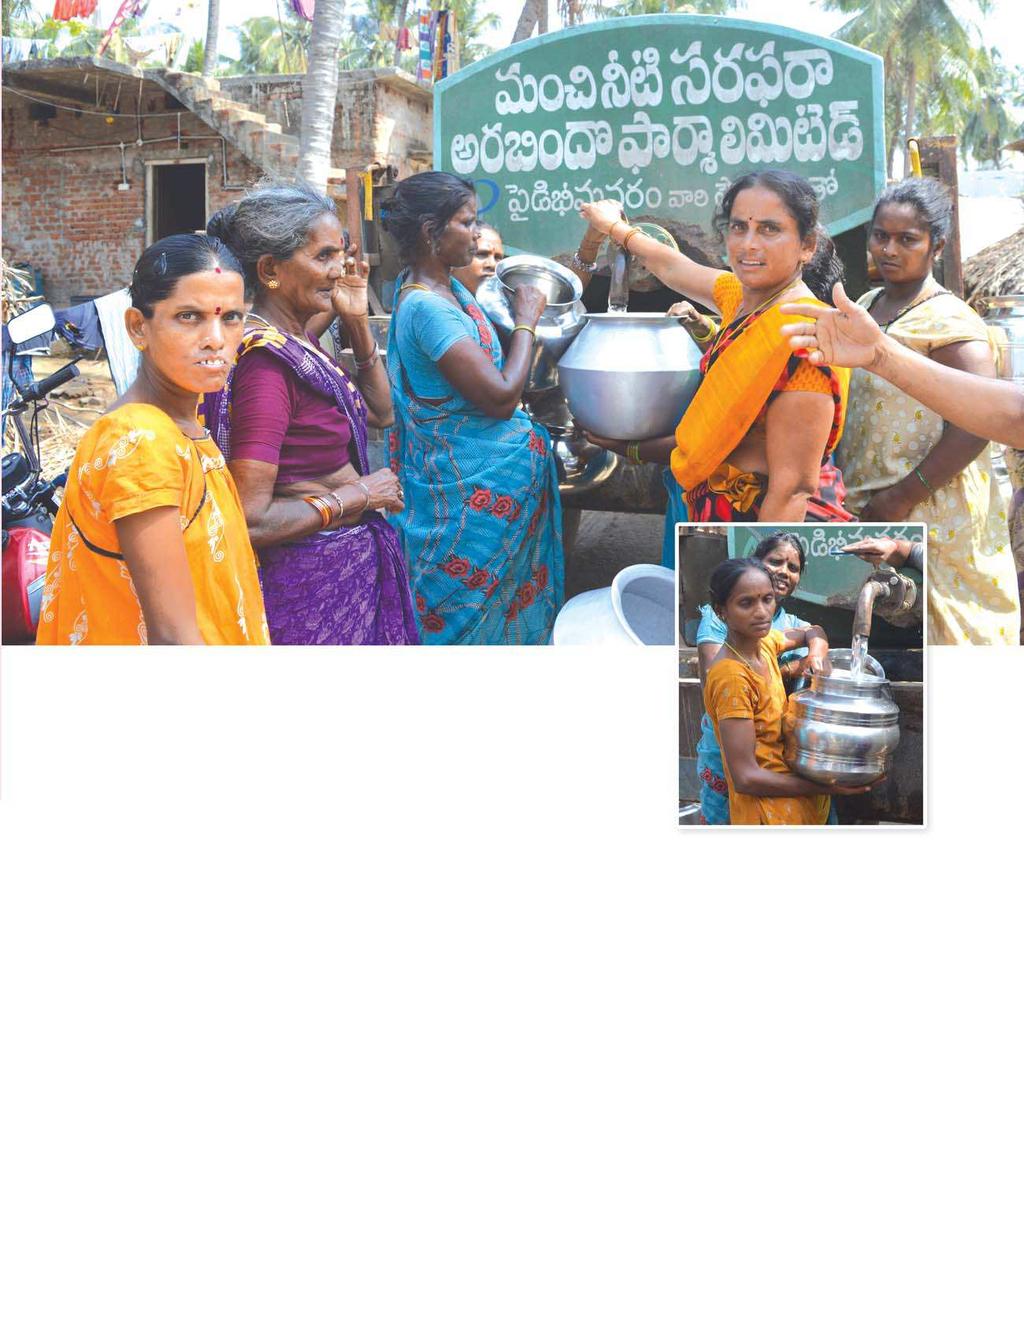 Purified Water Water tanker in the village Alladapalem (Pusapati Regamandal), Srikakulum district, residents Gaddivarapu Appayamma and P.